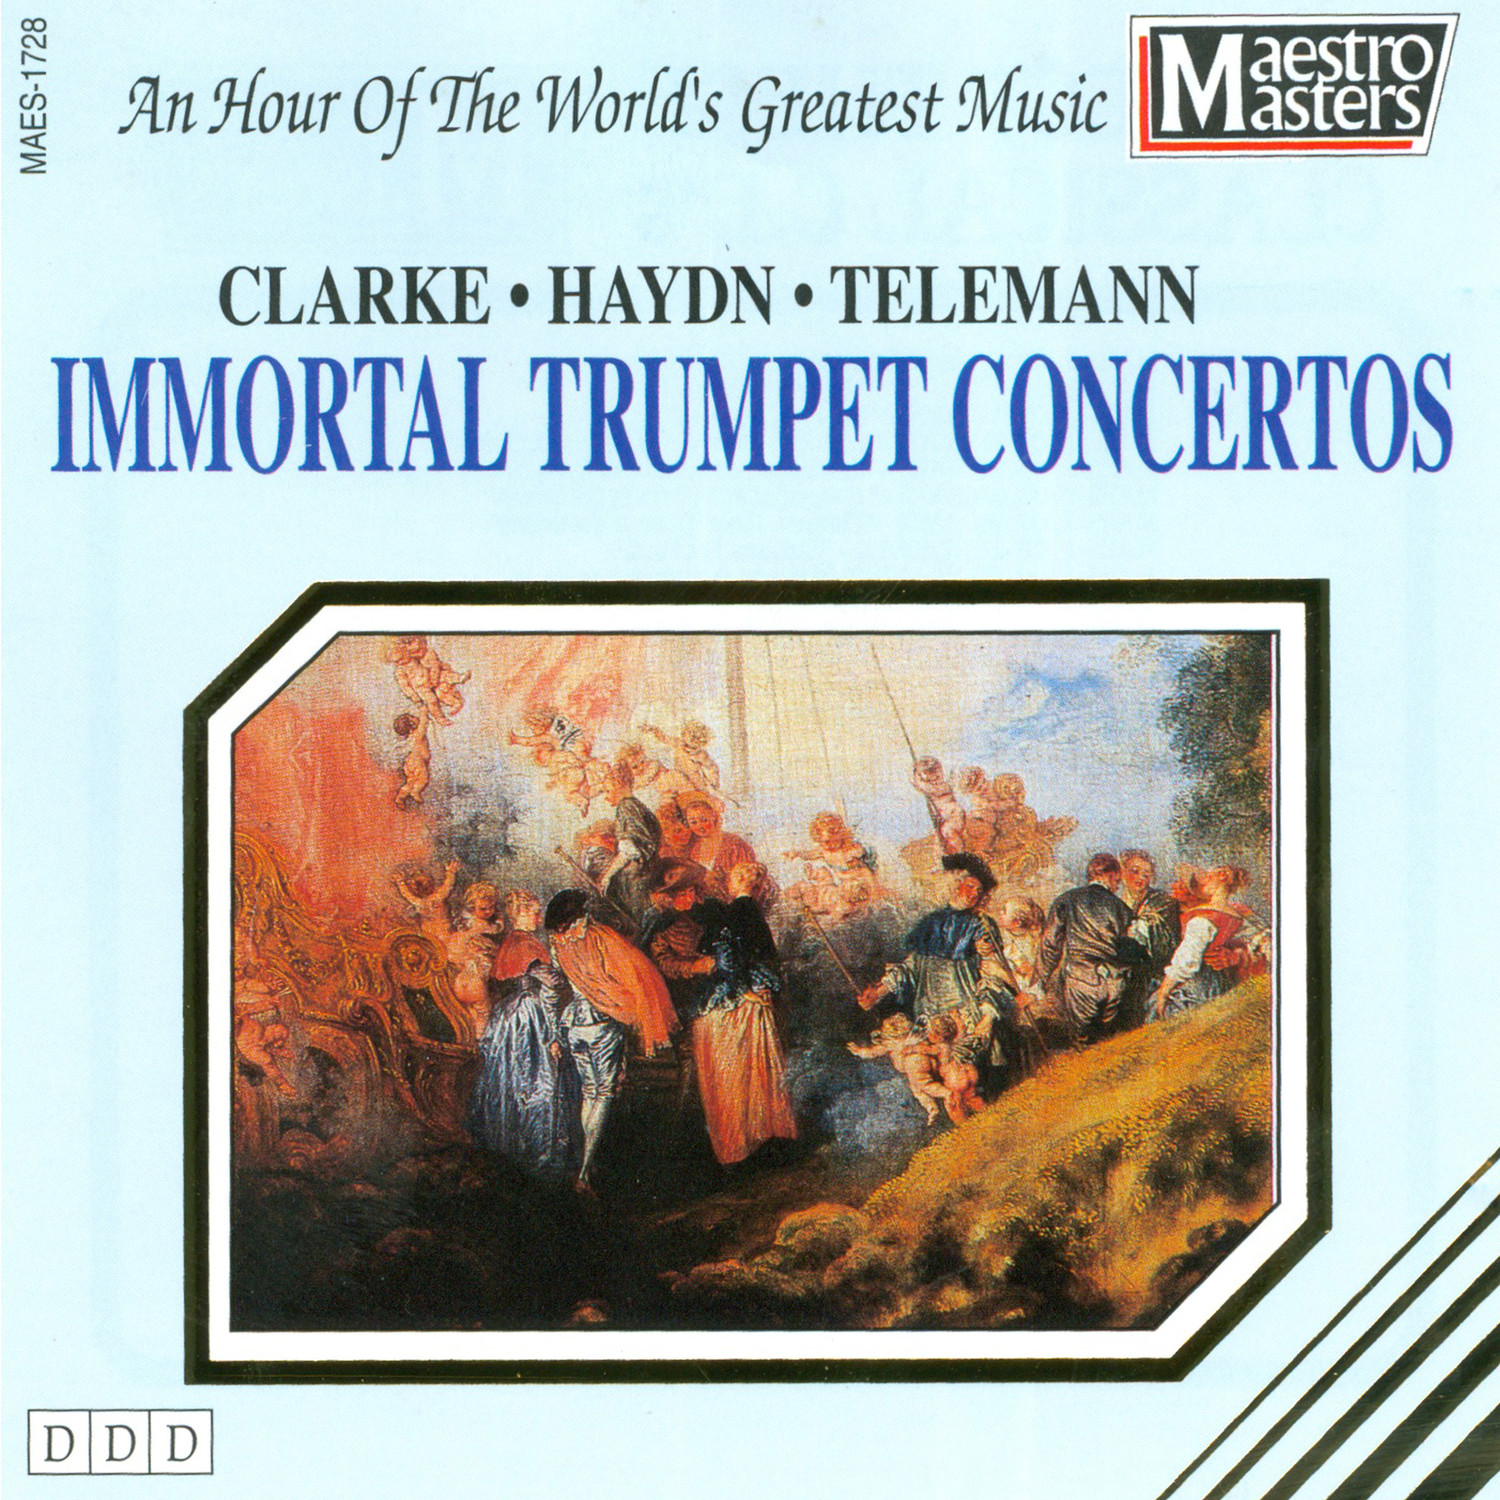 Immortal Trumpet Concertos